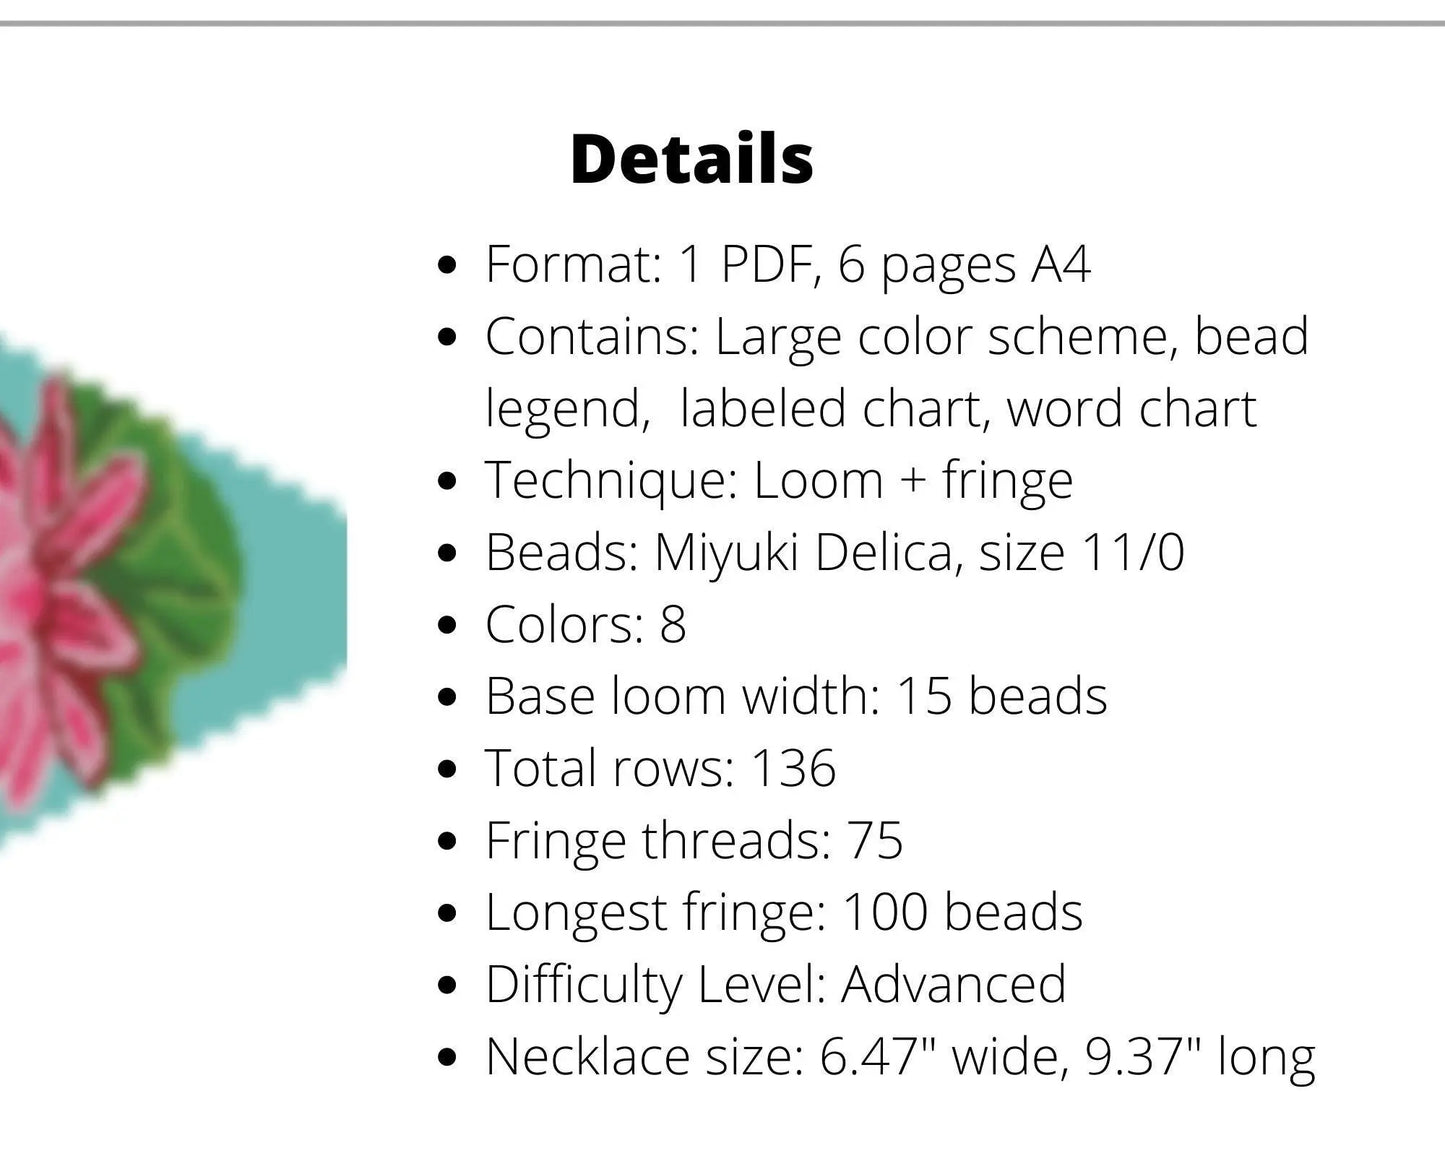 Lotus Beaded Loom Fringe Necklace Pattern - DIY Boho Jewelry - NikoBeadsUA